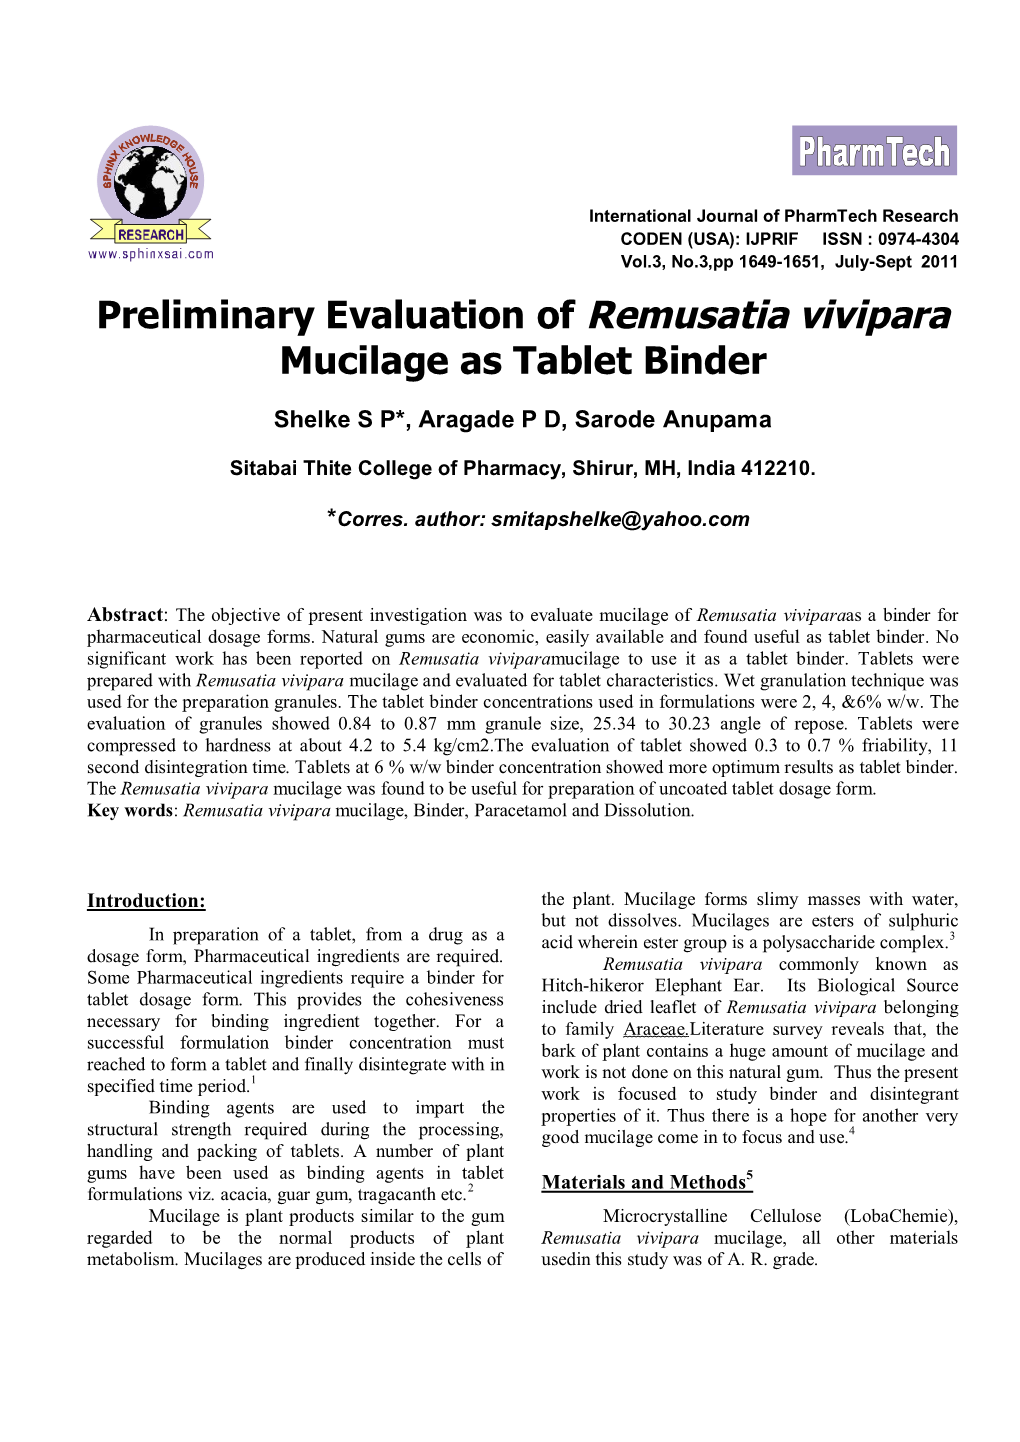 Preliminary Evaluation of Remusatia Vivipara Mucilage As Tablet Binder